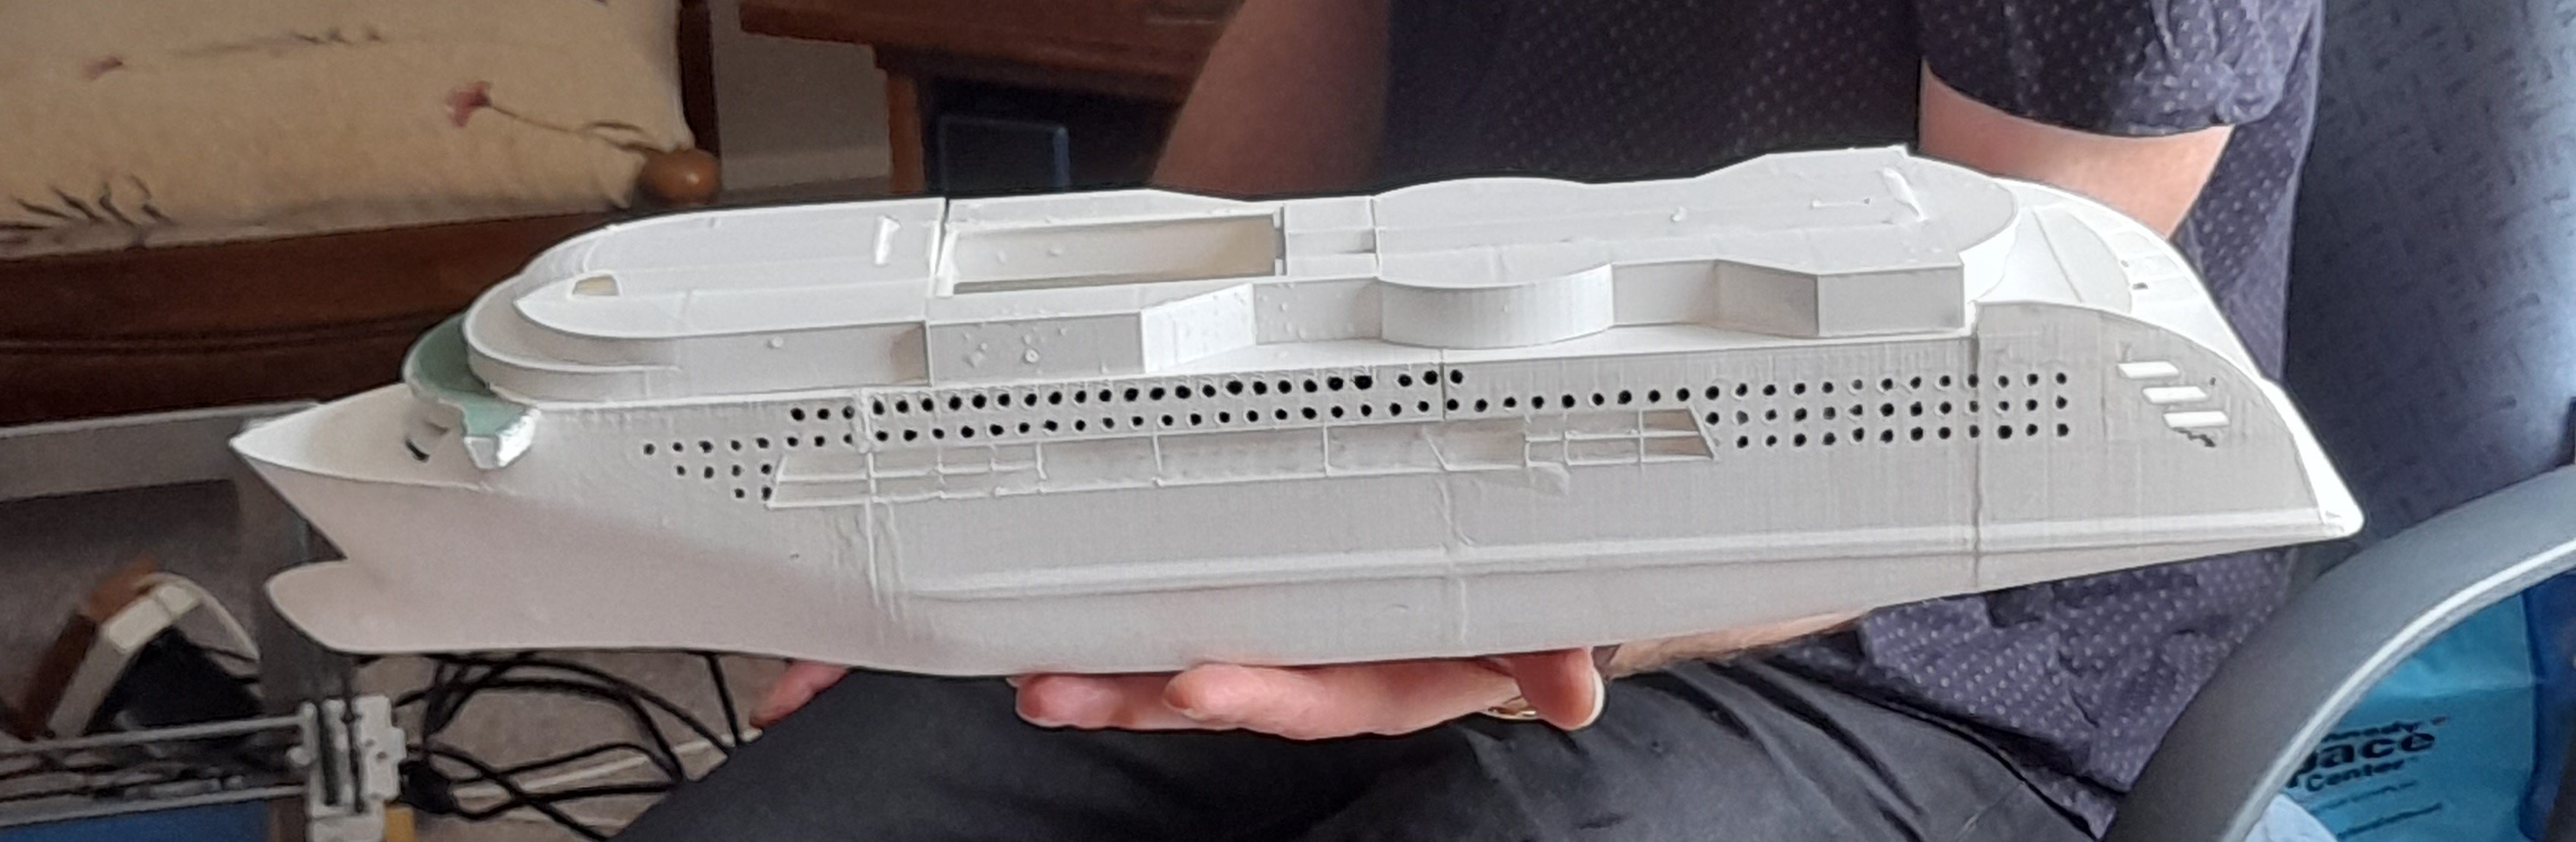 3D printer boat